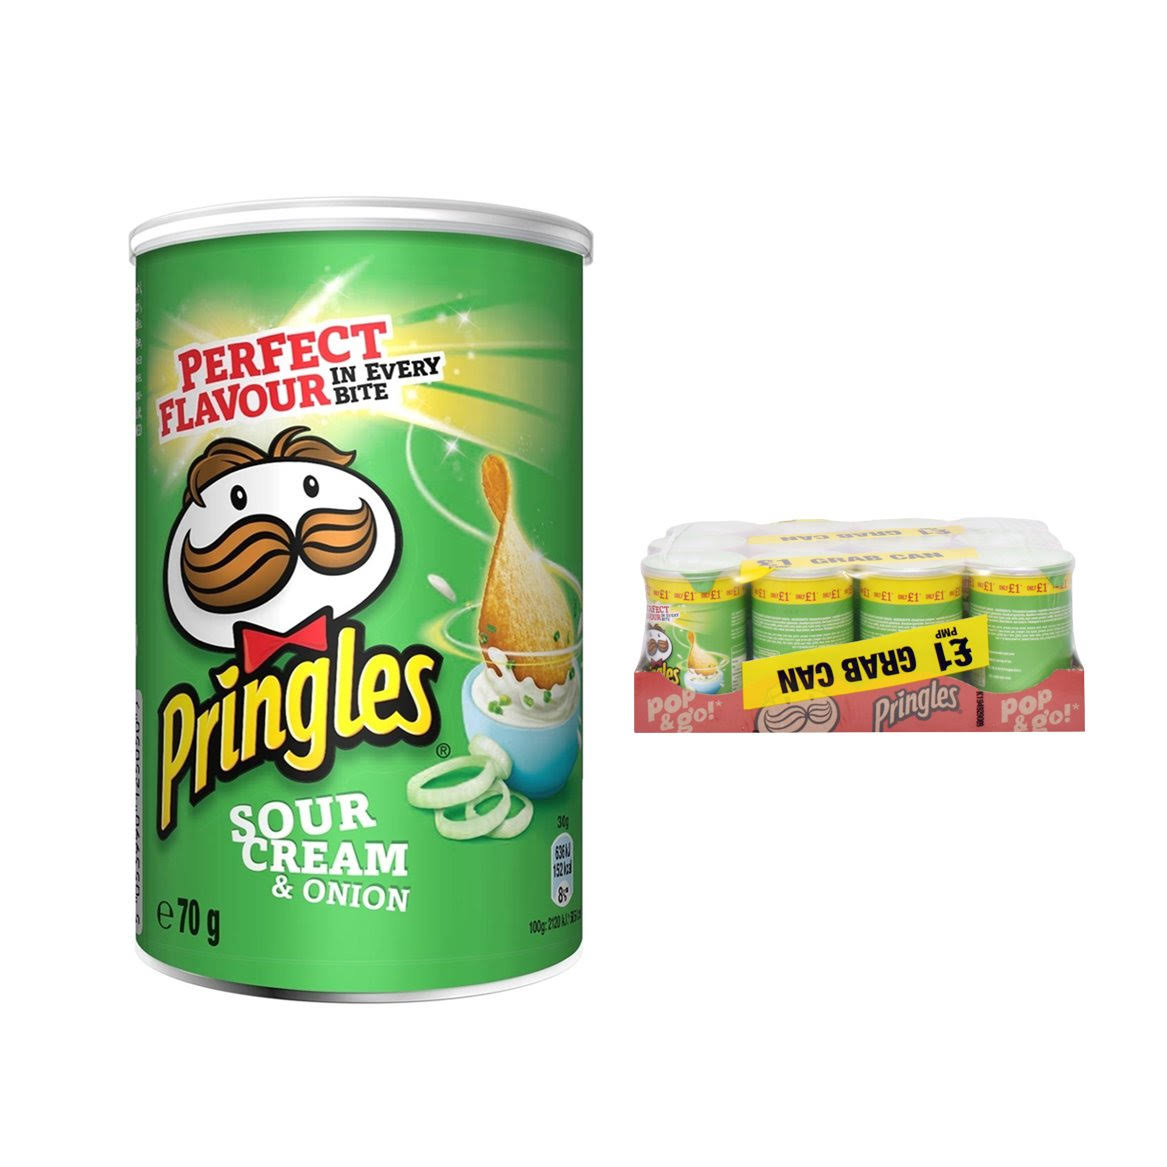 Pringles Crisps - Sour Cream and Onion, 70g